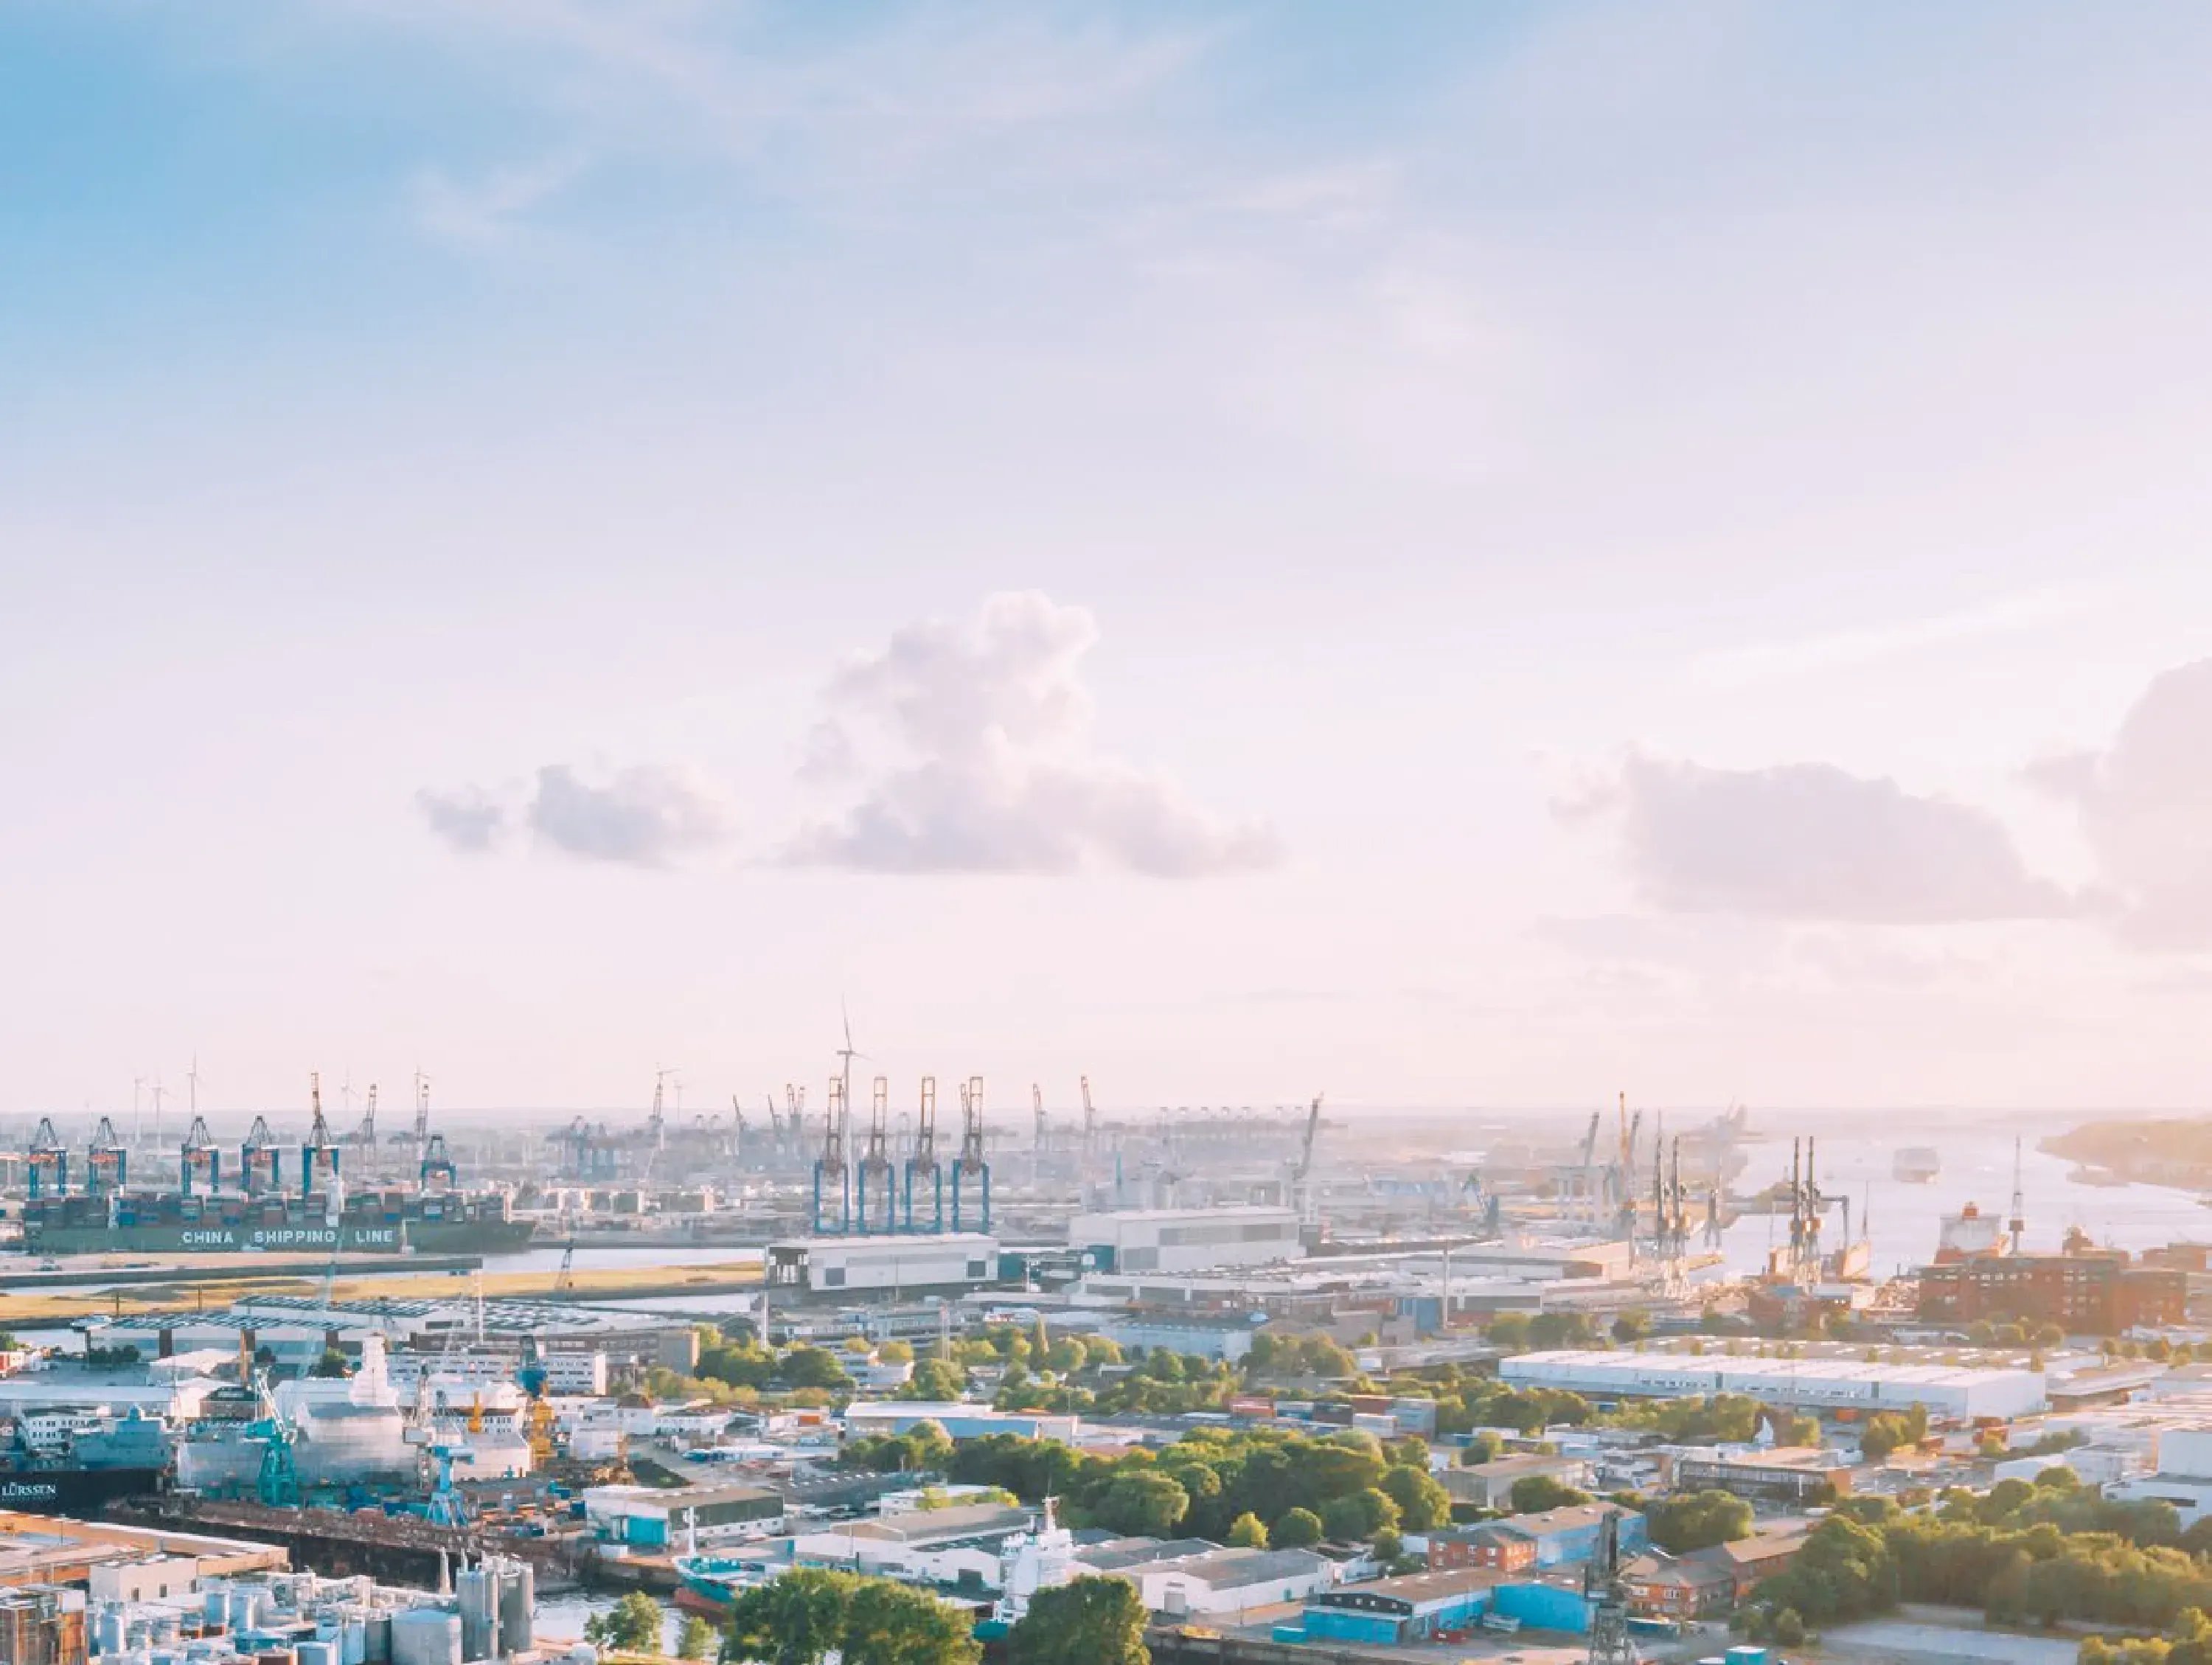 Hamburg port skyline